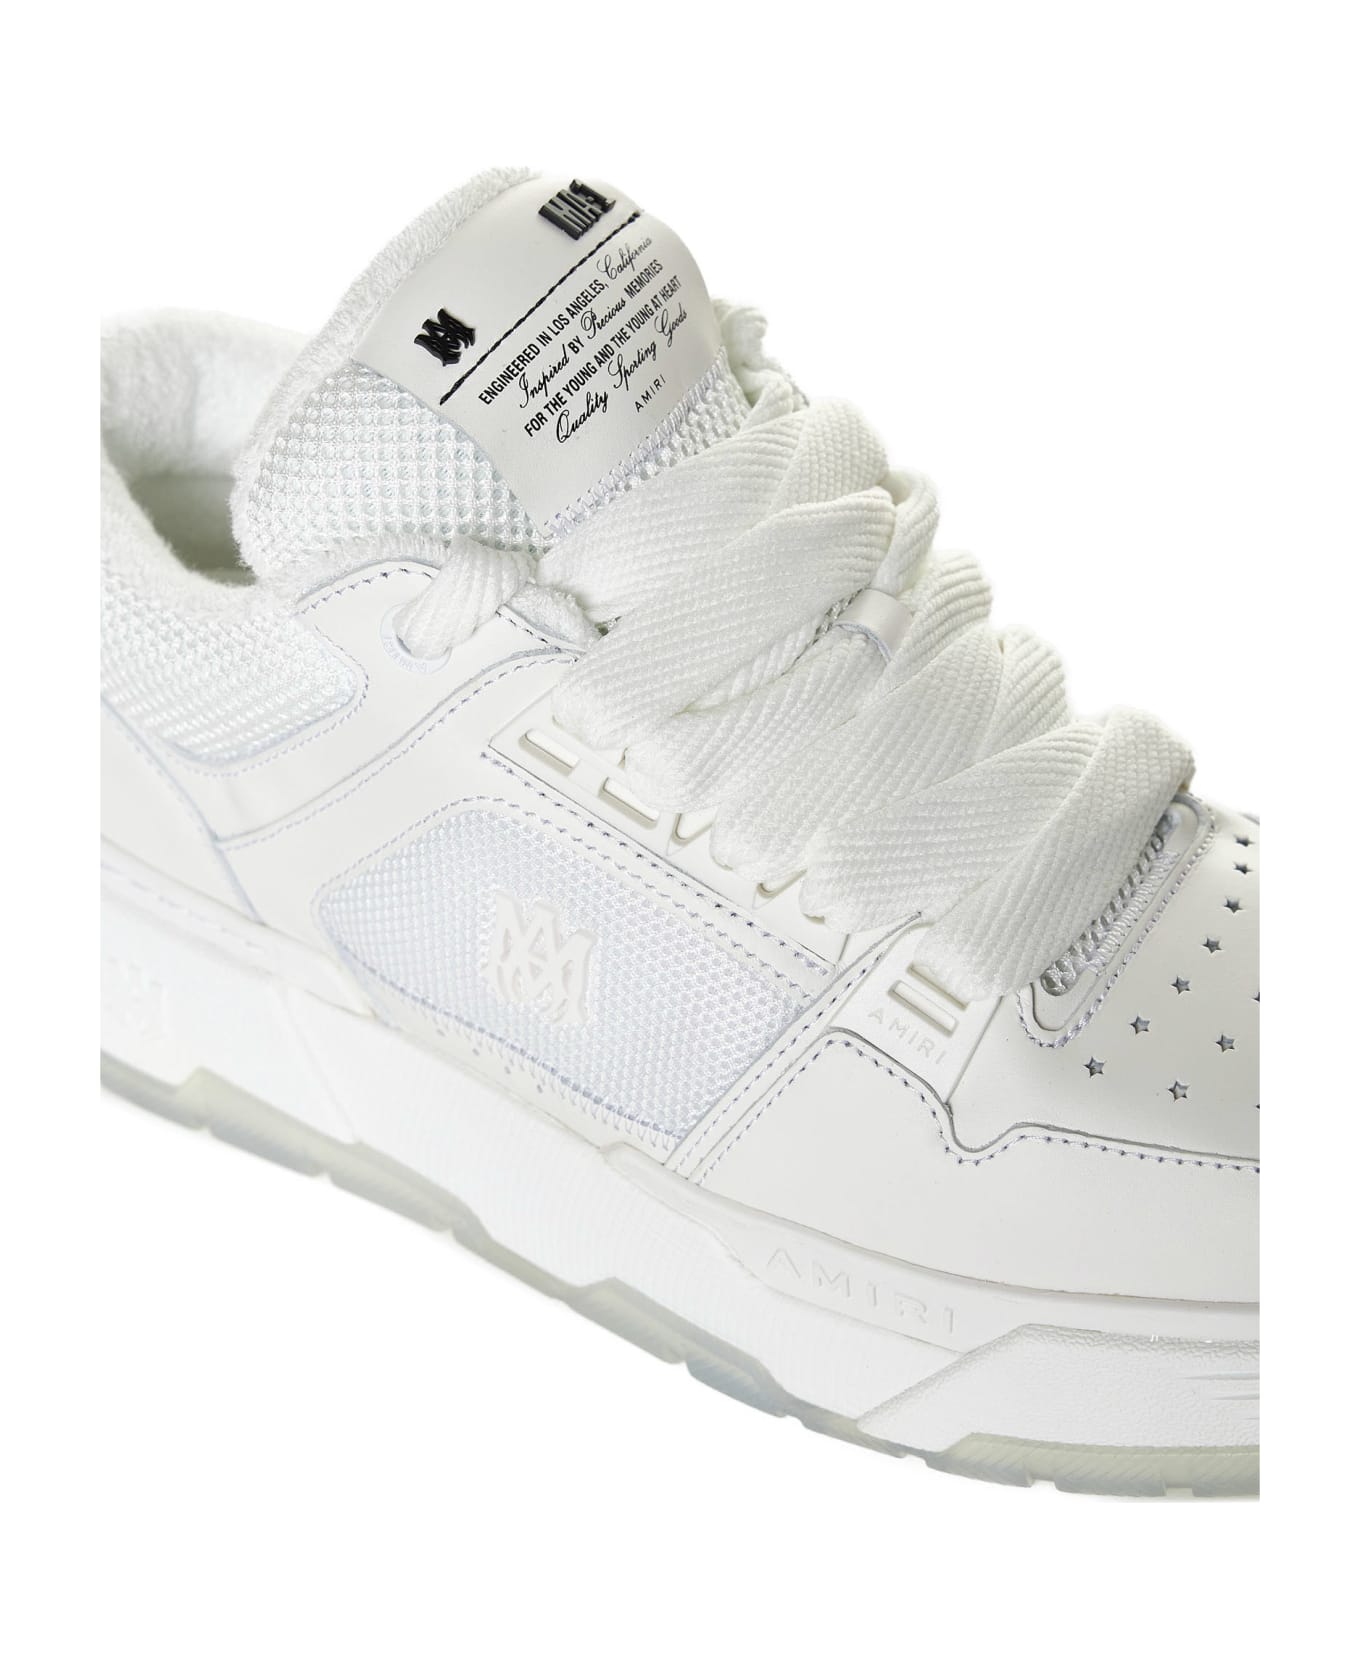 AMIRI Sneakers - White